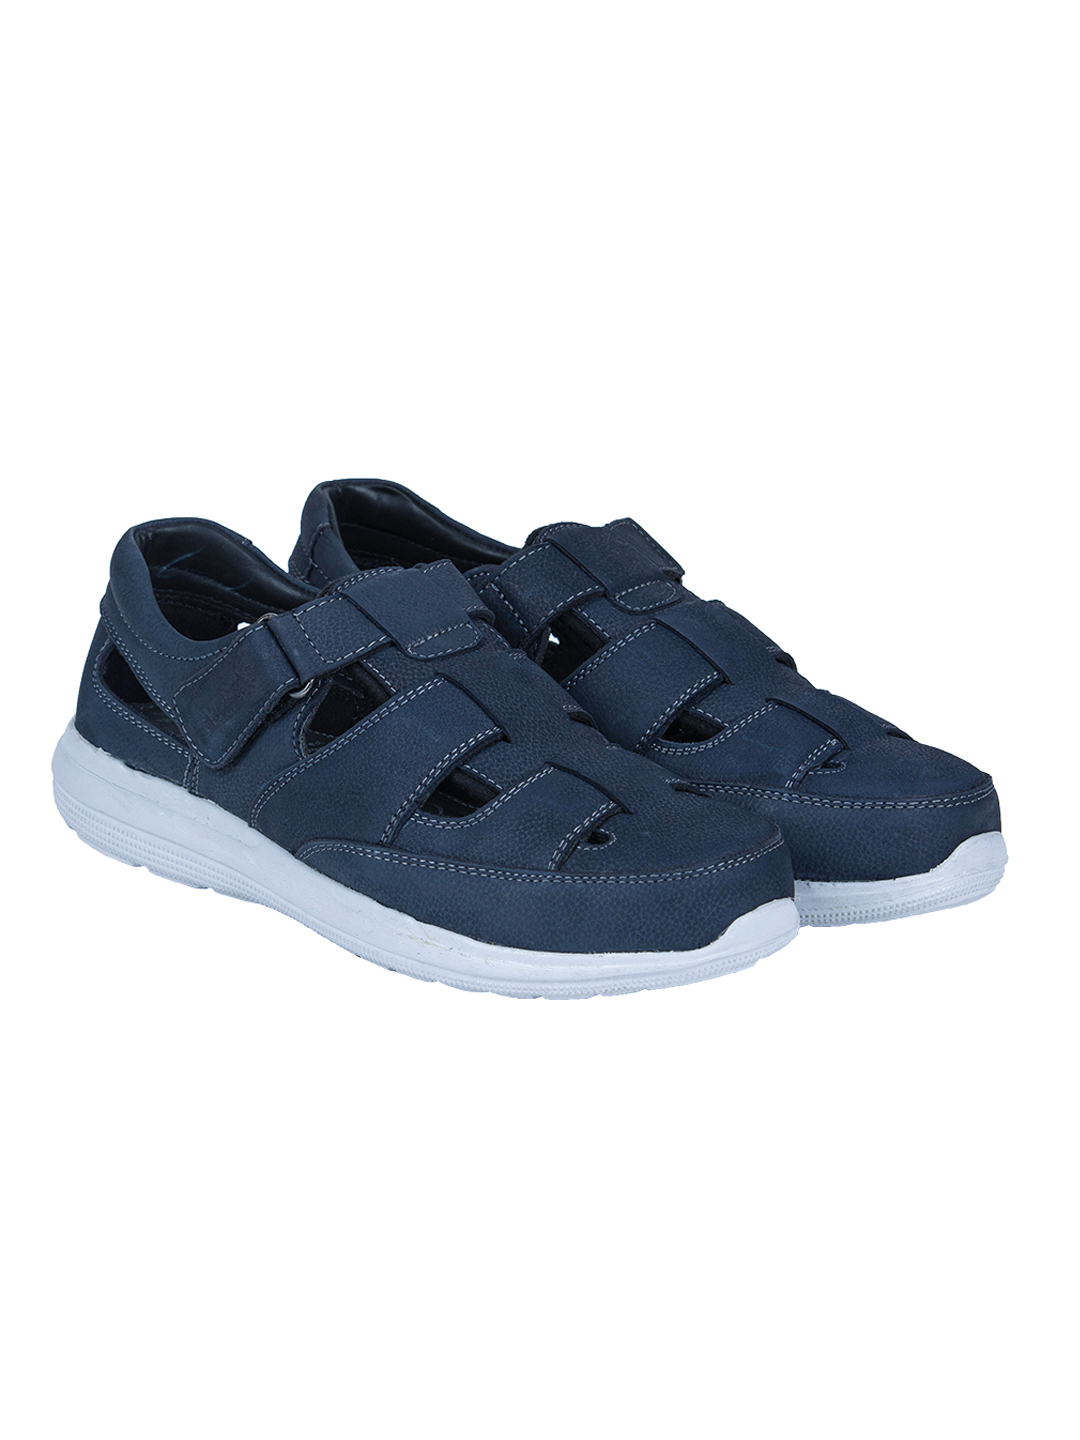 Buy Von Wellx Germany Comfort Blue James Sandals Online in Kozhikode